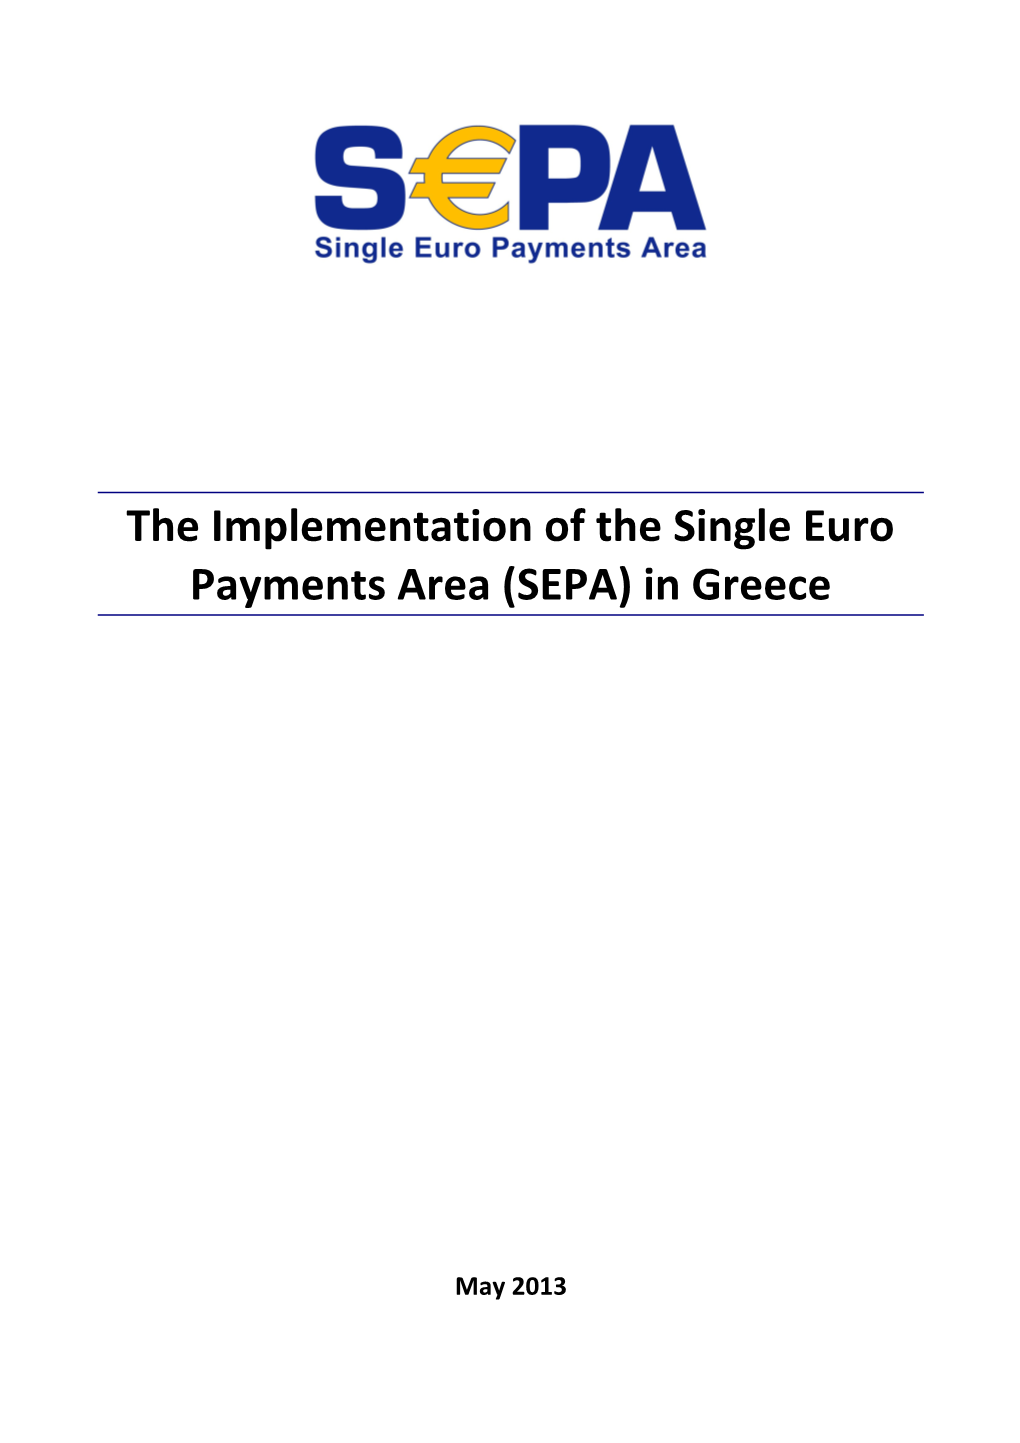 Final-SEPA Implementation and Migration Plan in Greece El 12 06 13 EN-TRA